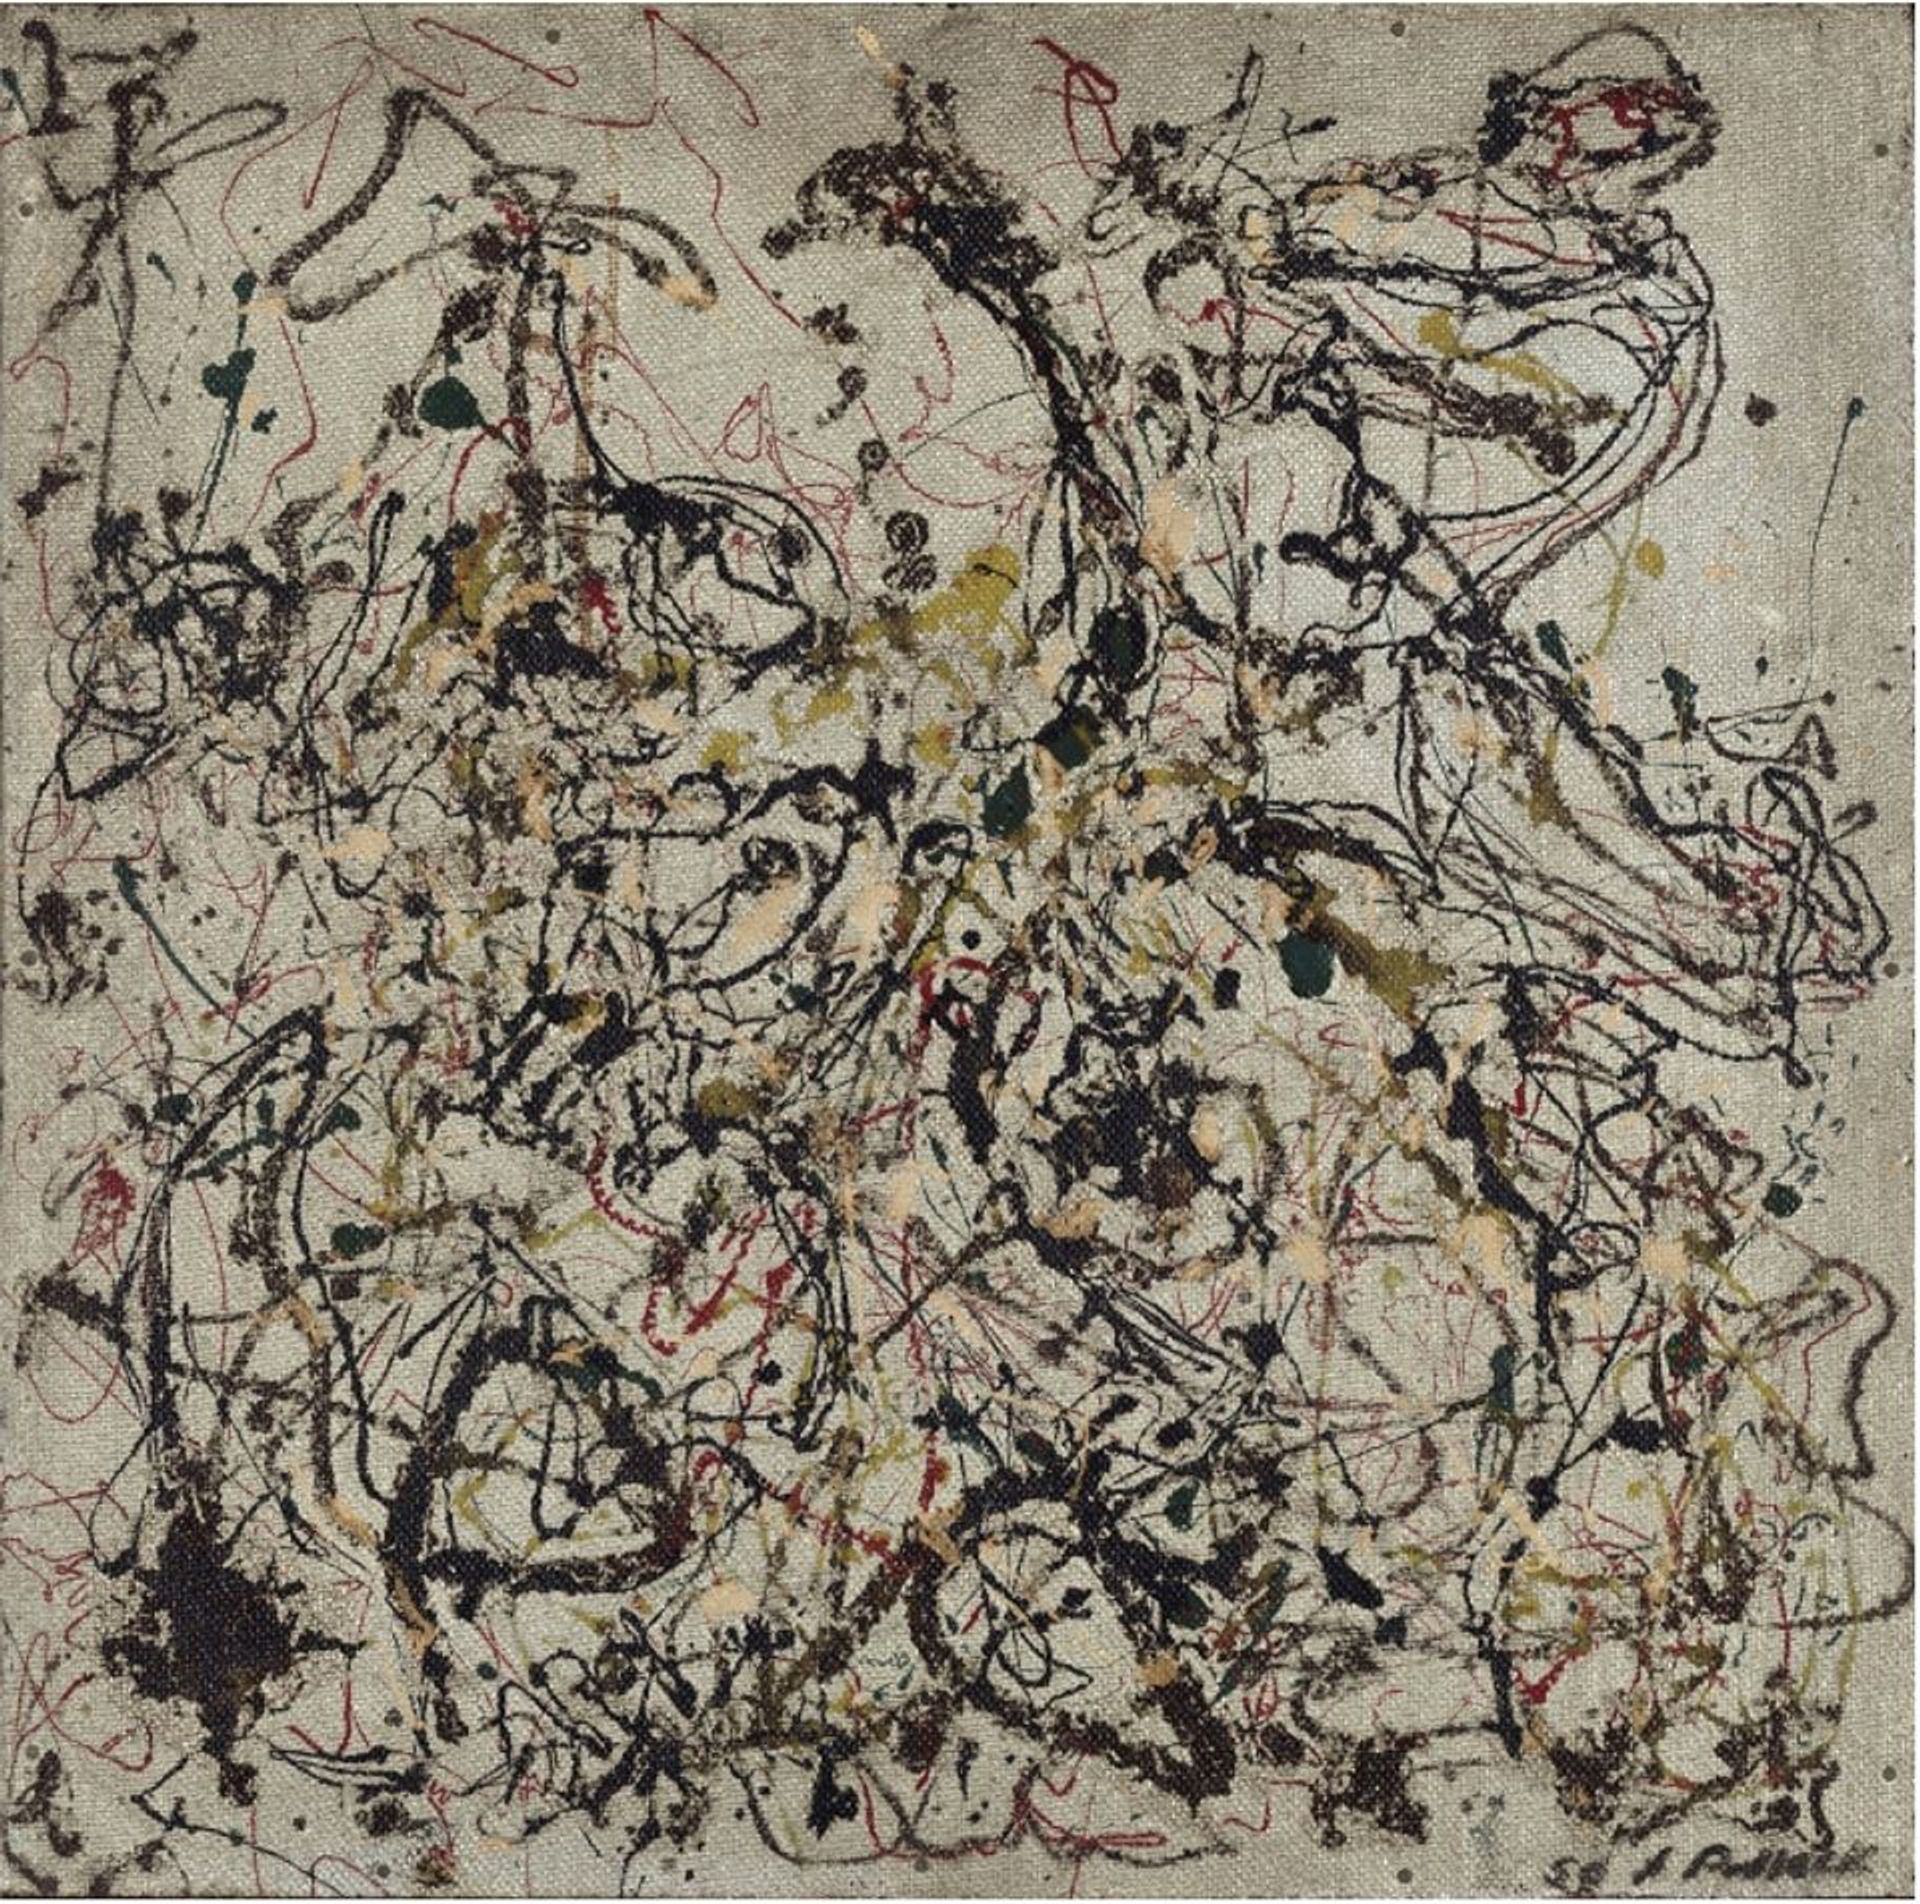 Jackson Pollock's No. 16 (1950) 